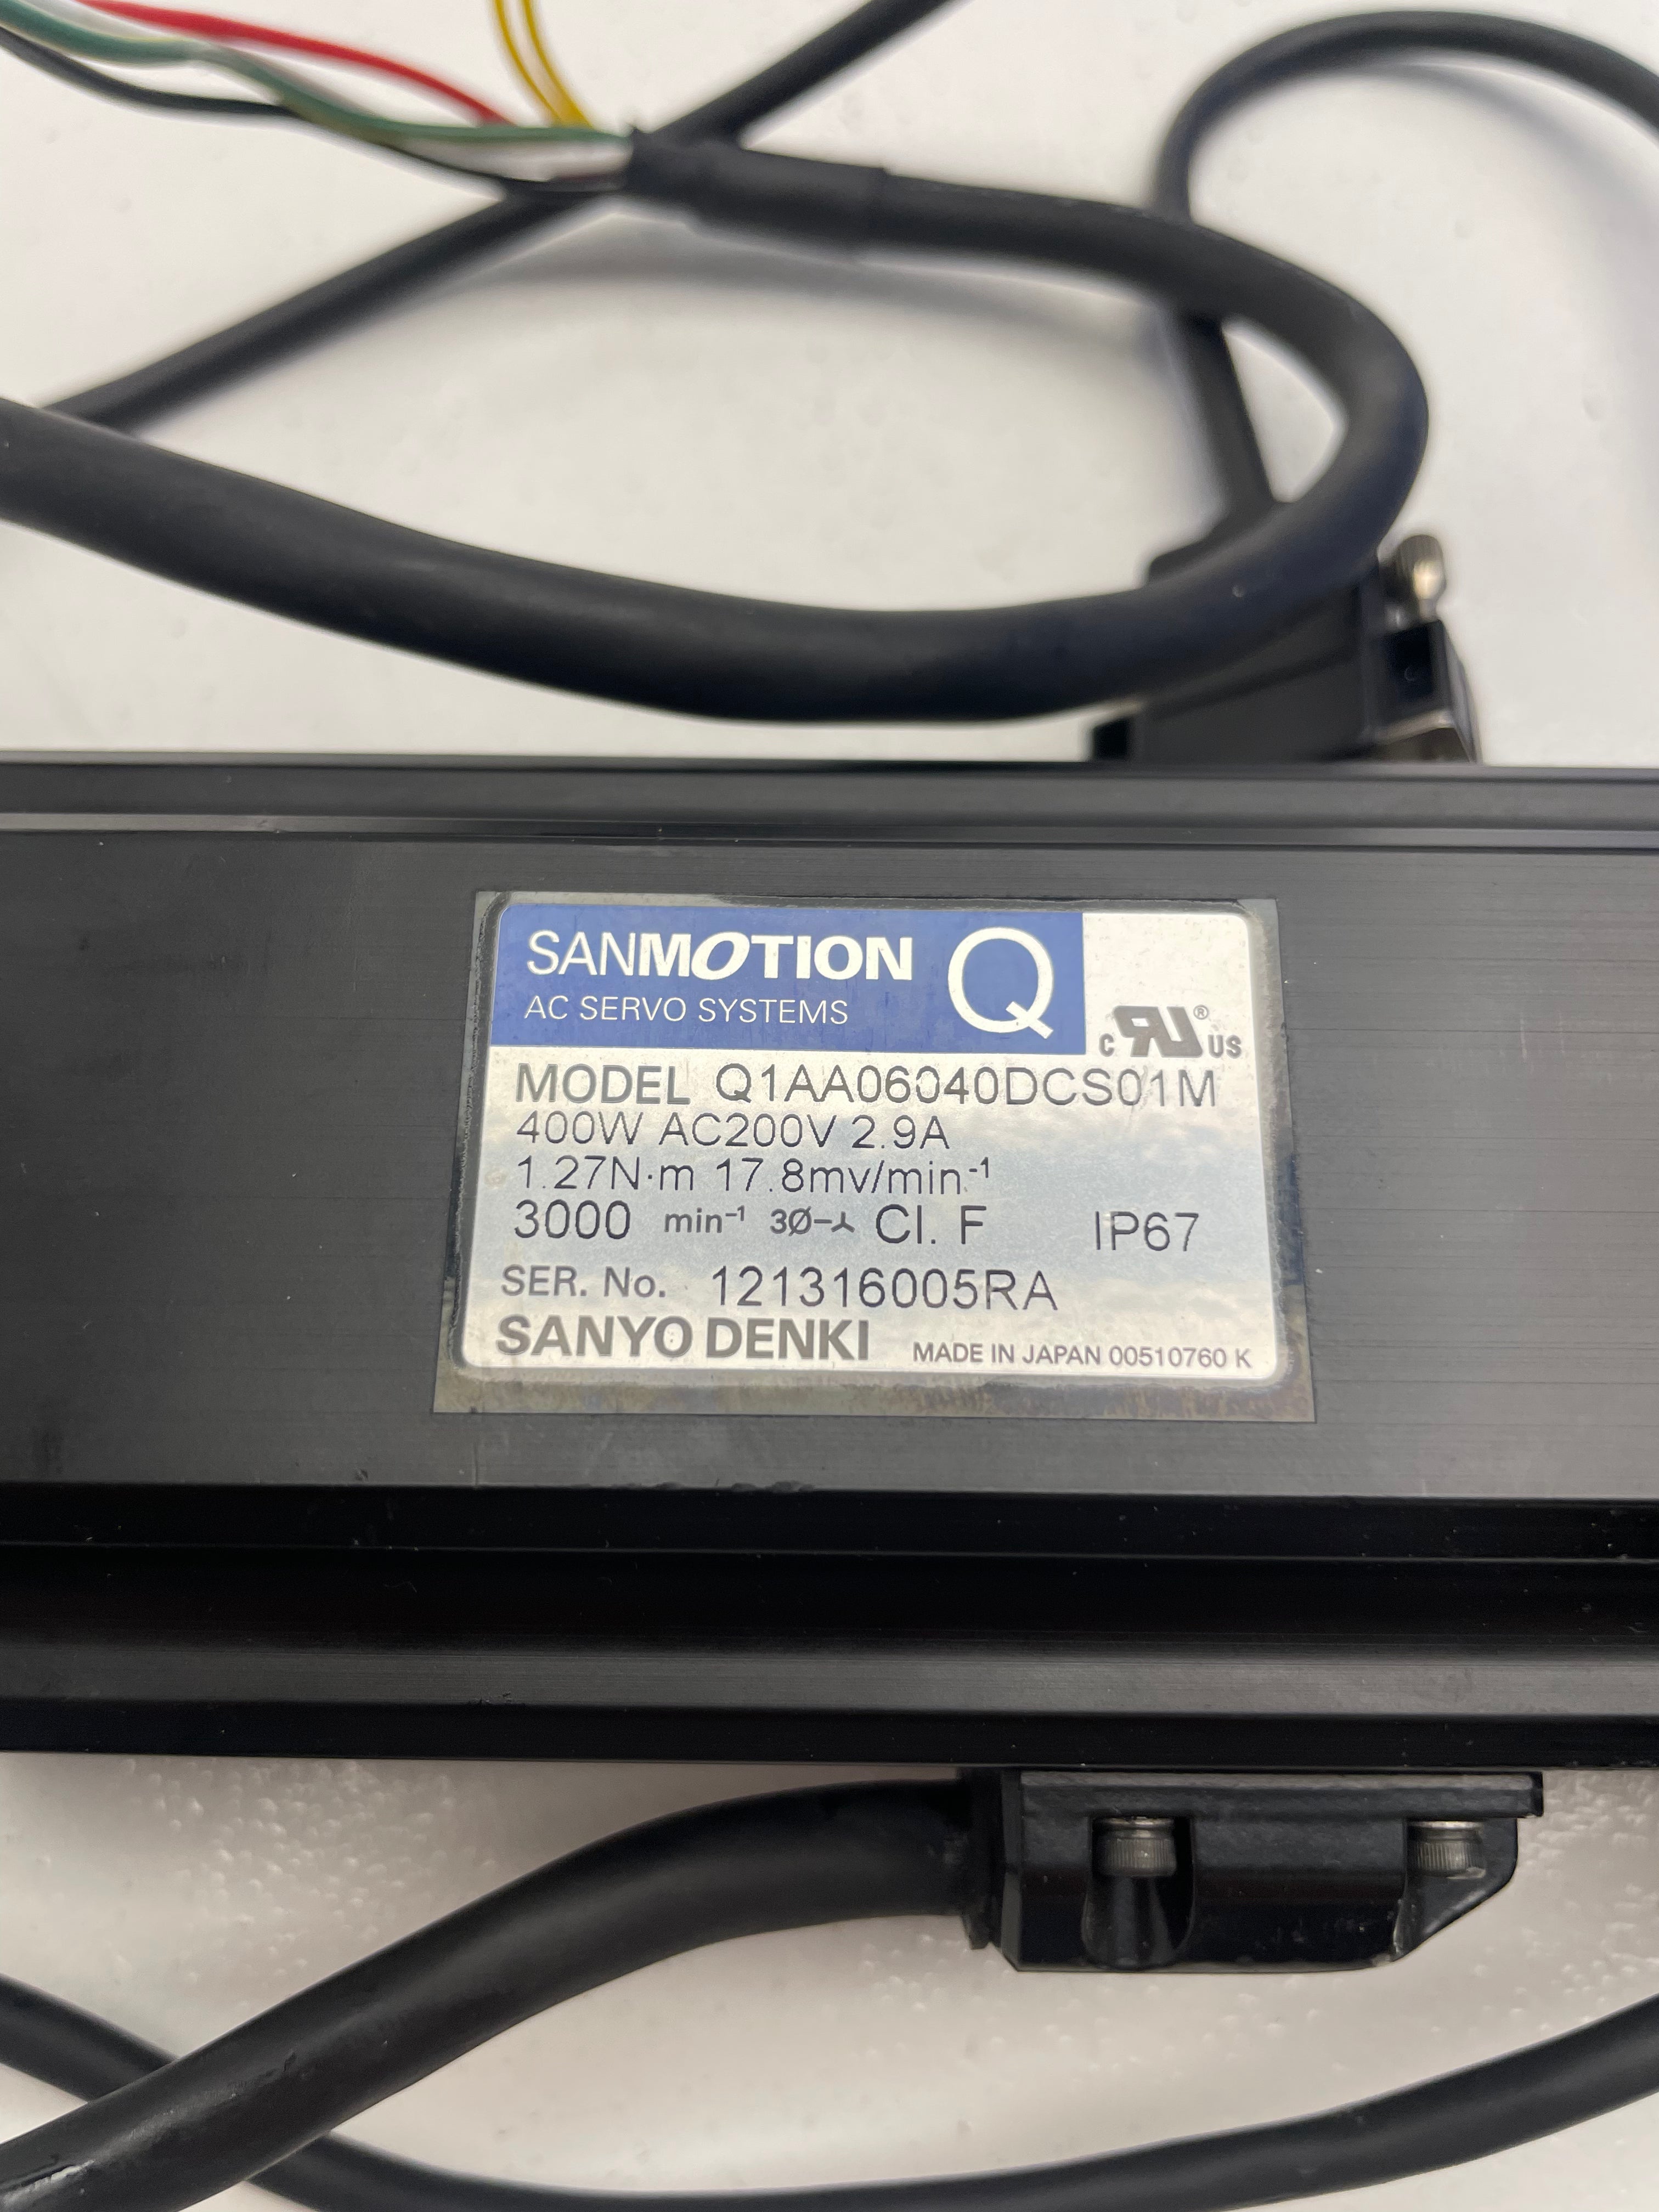 Sanyo Denki/Sanmotion Q1AA06040DCS01M